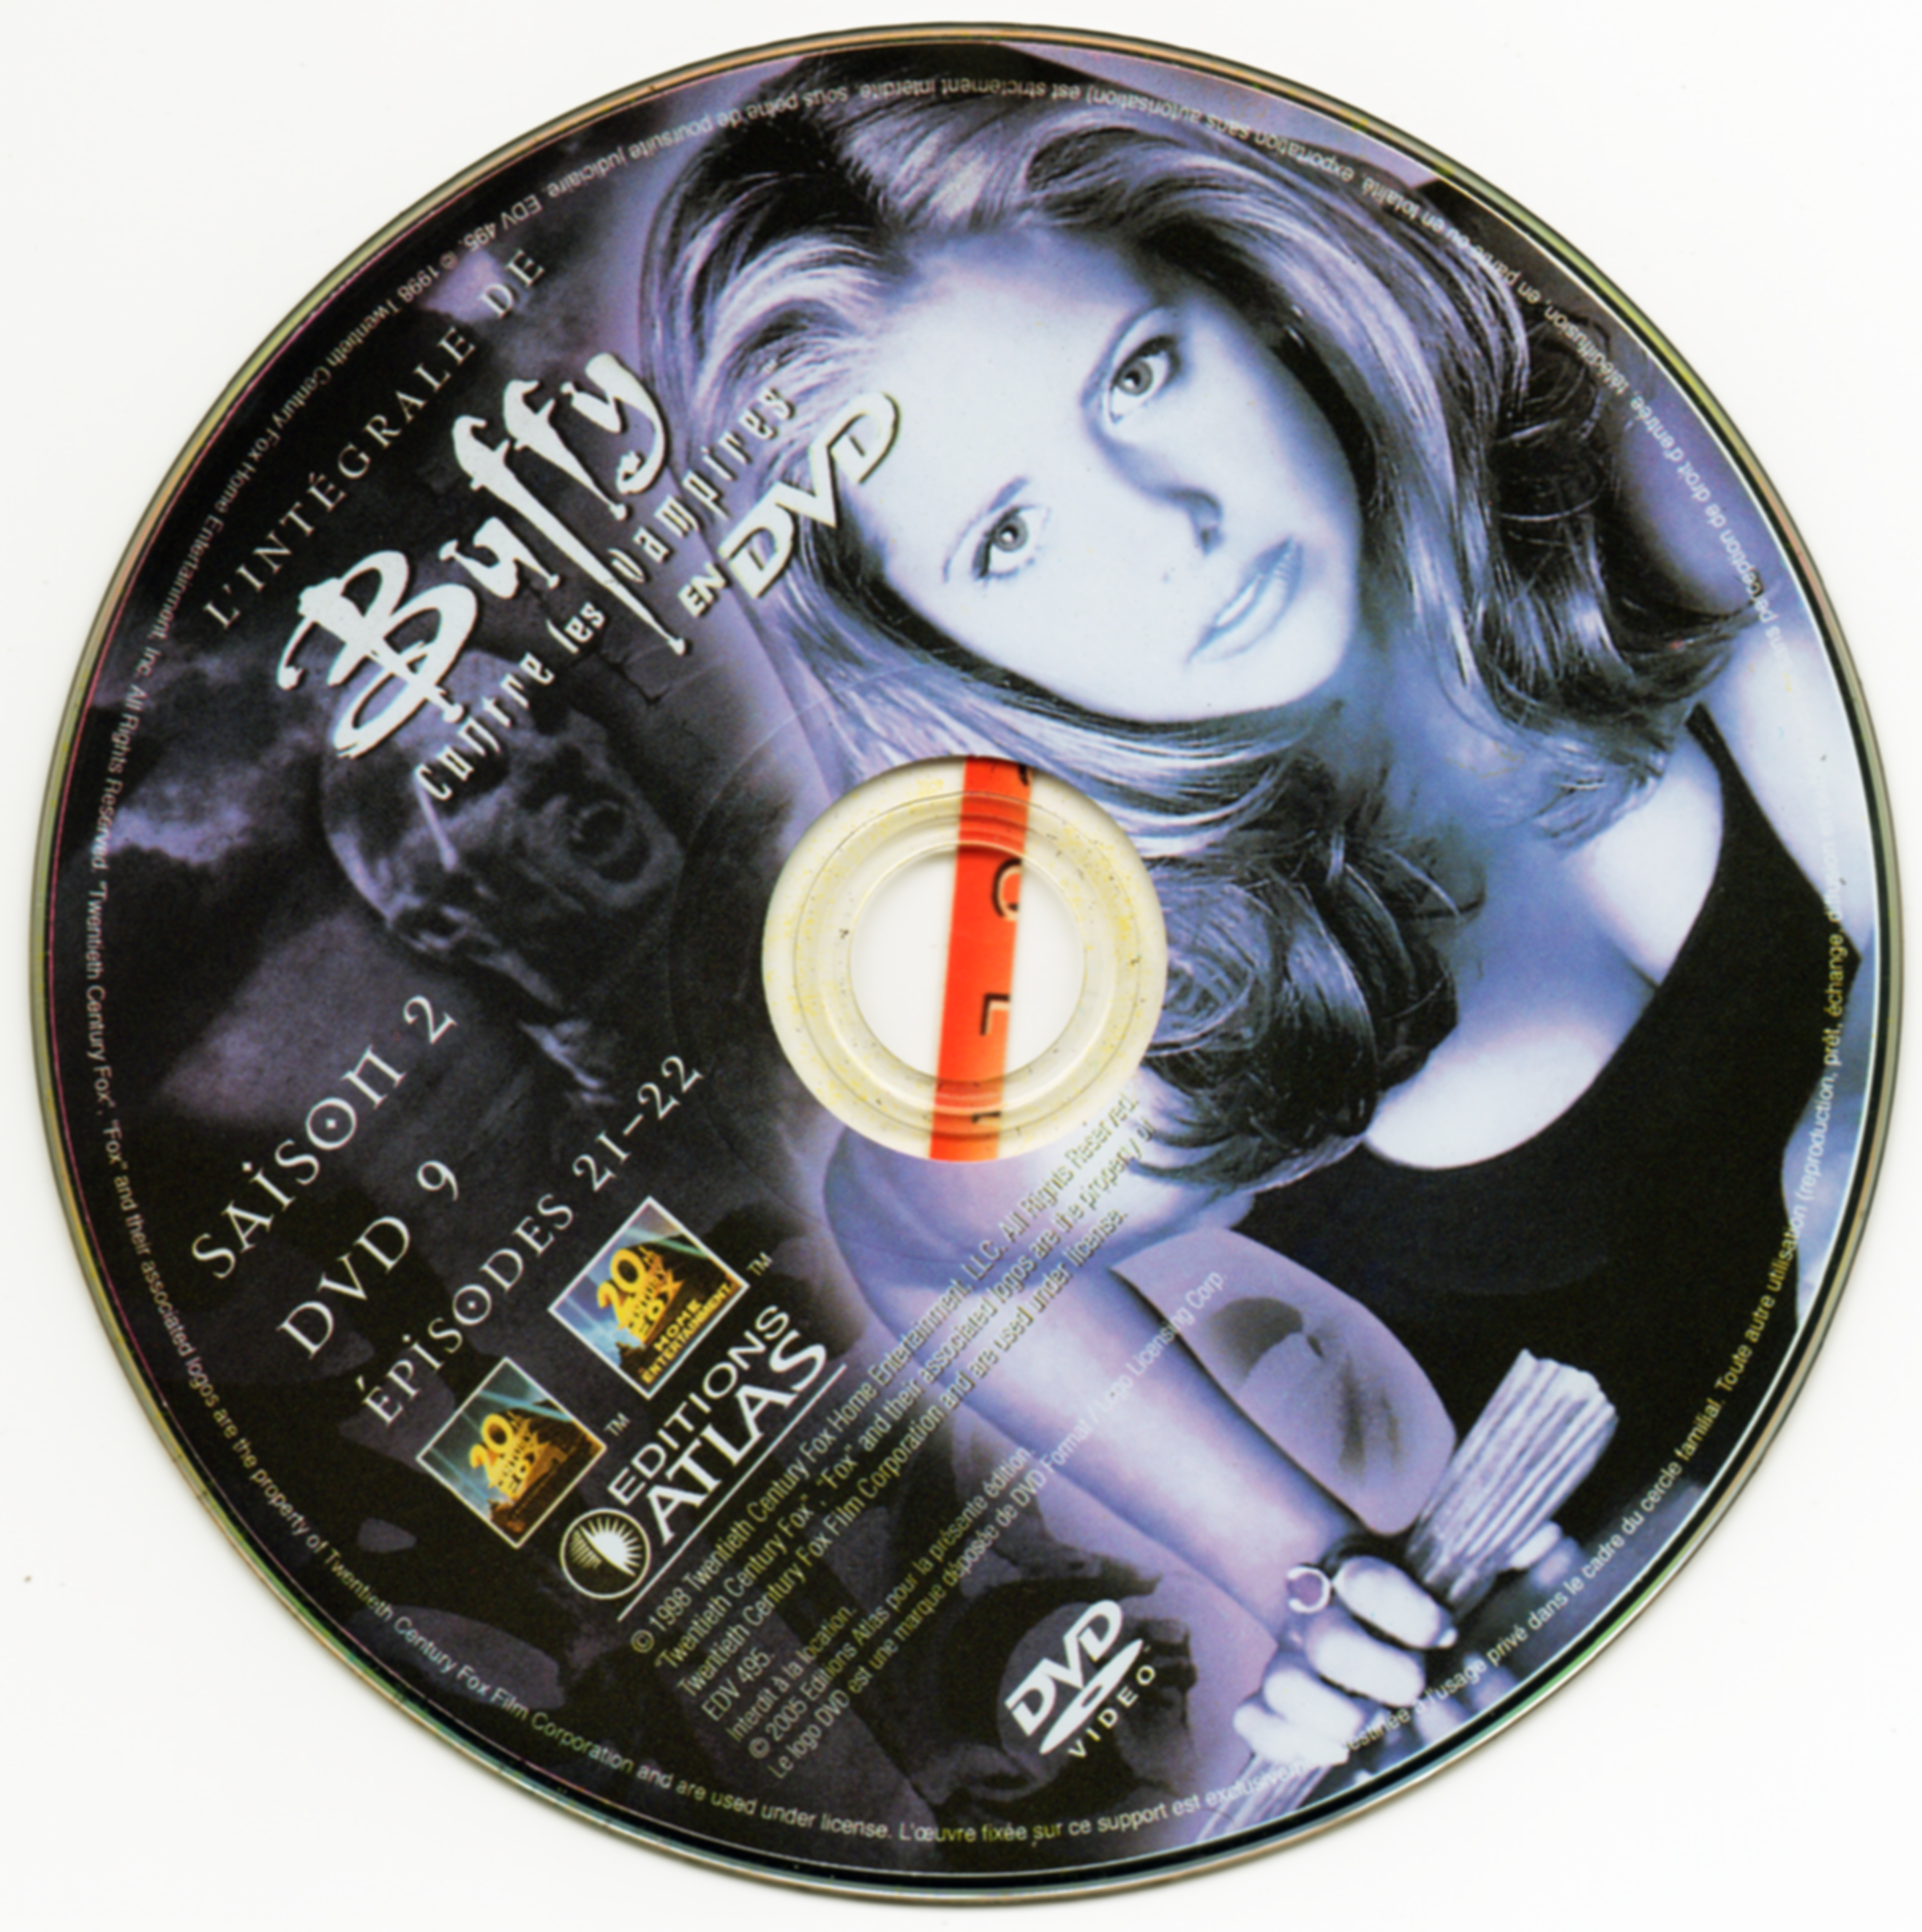 Buffy contre les vampires DVD 09 Ed Atlas